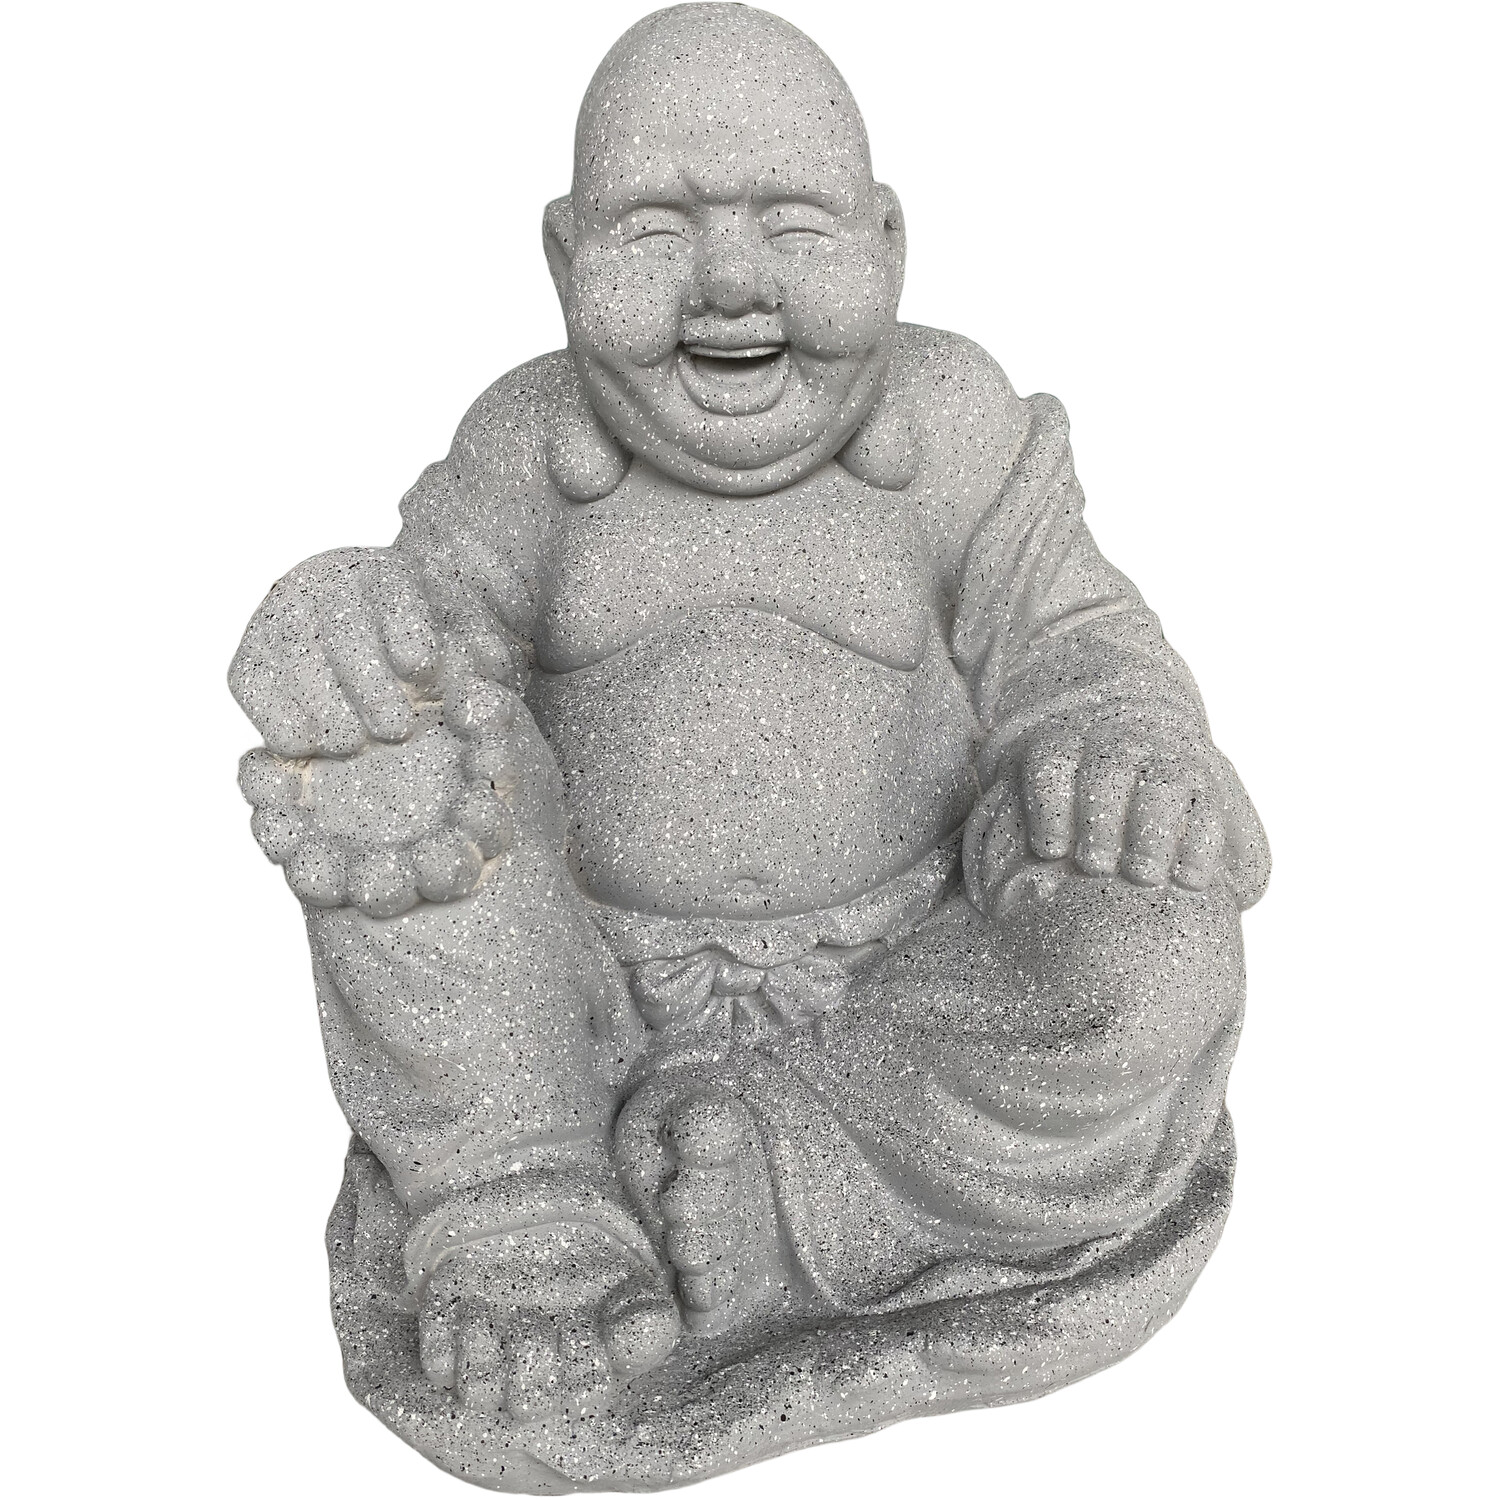 Laughing Garden Buddha Ornament Image 1